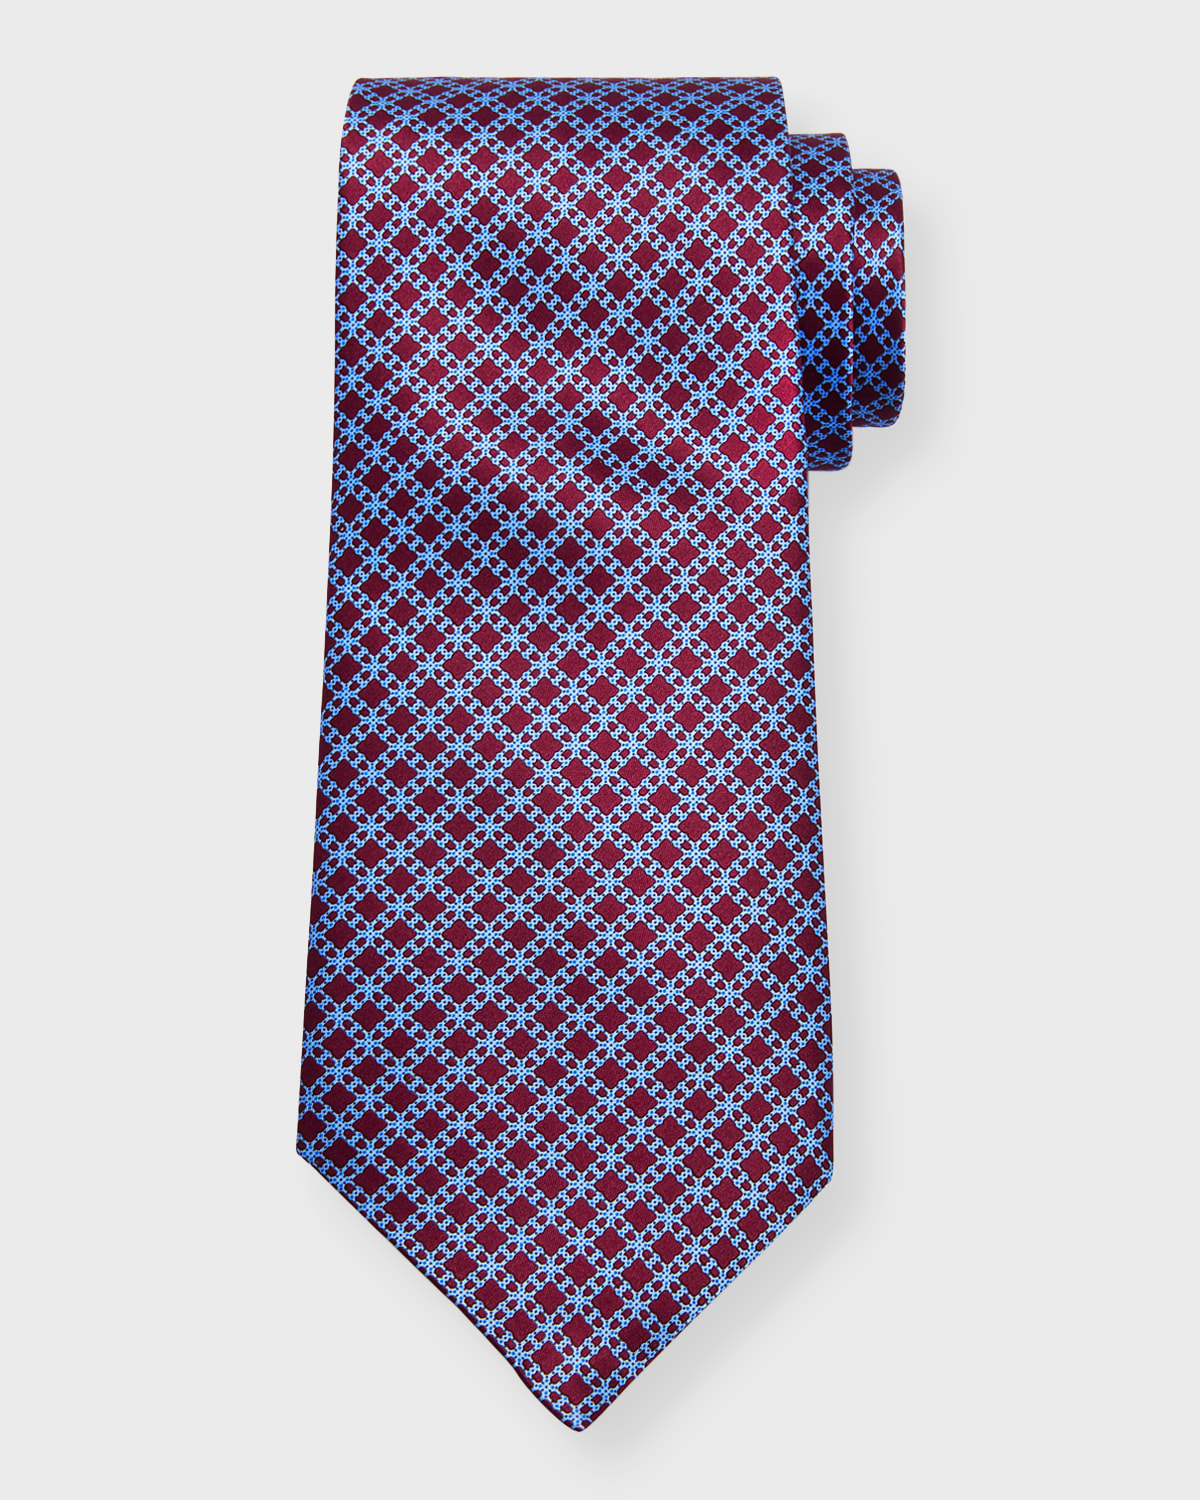 Men's Silk Multi-Grid Tie